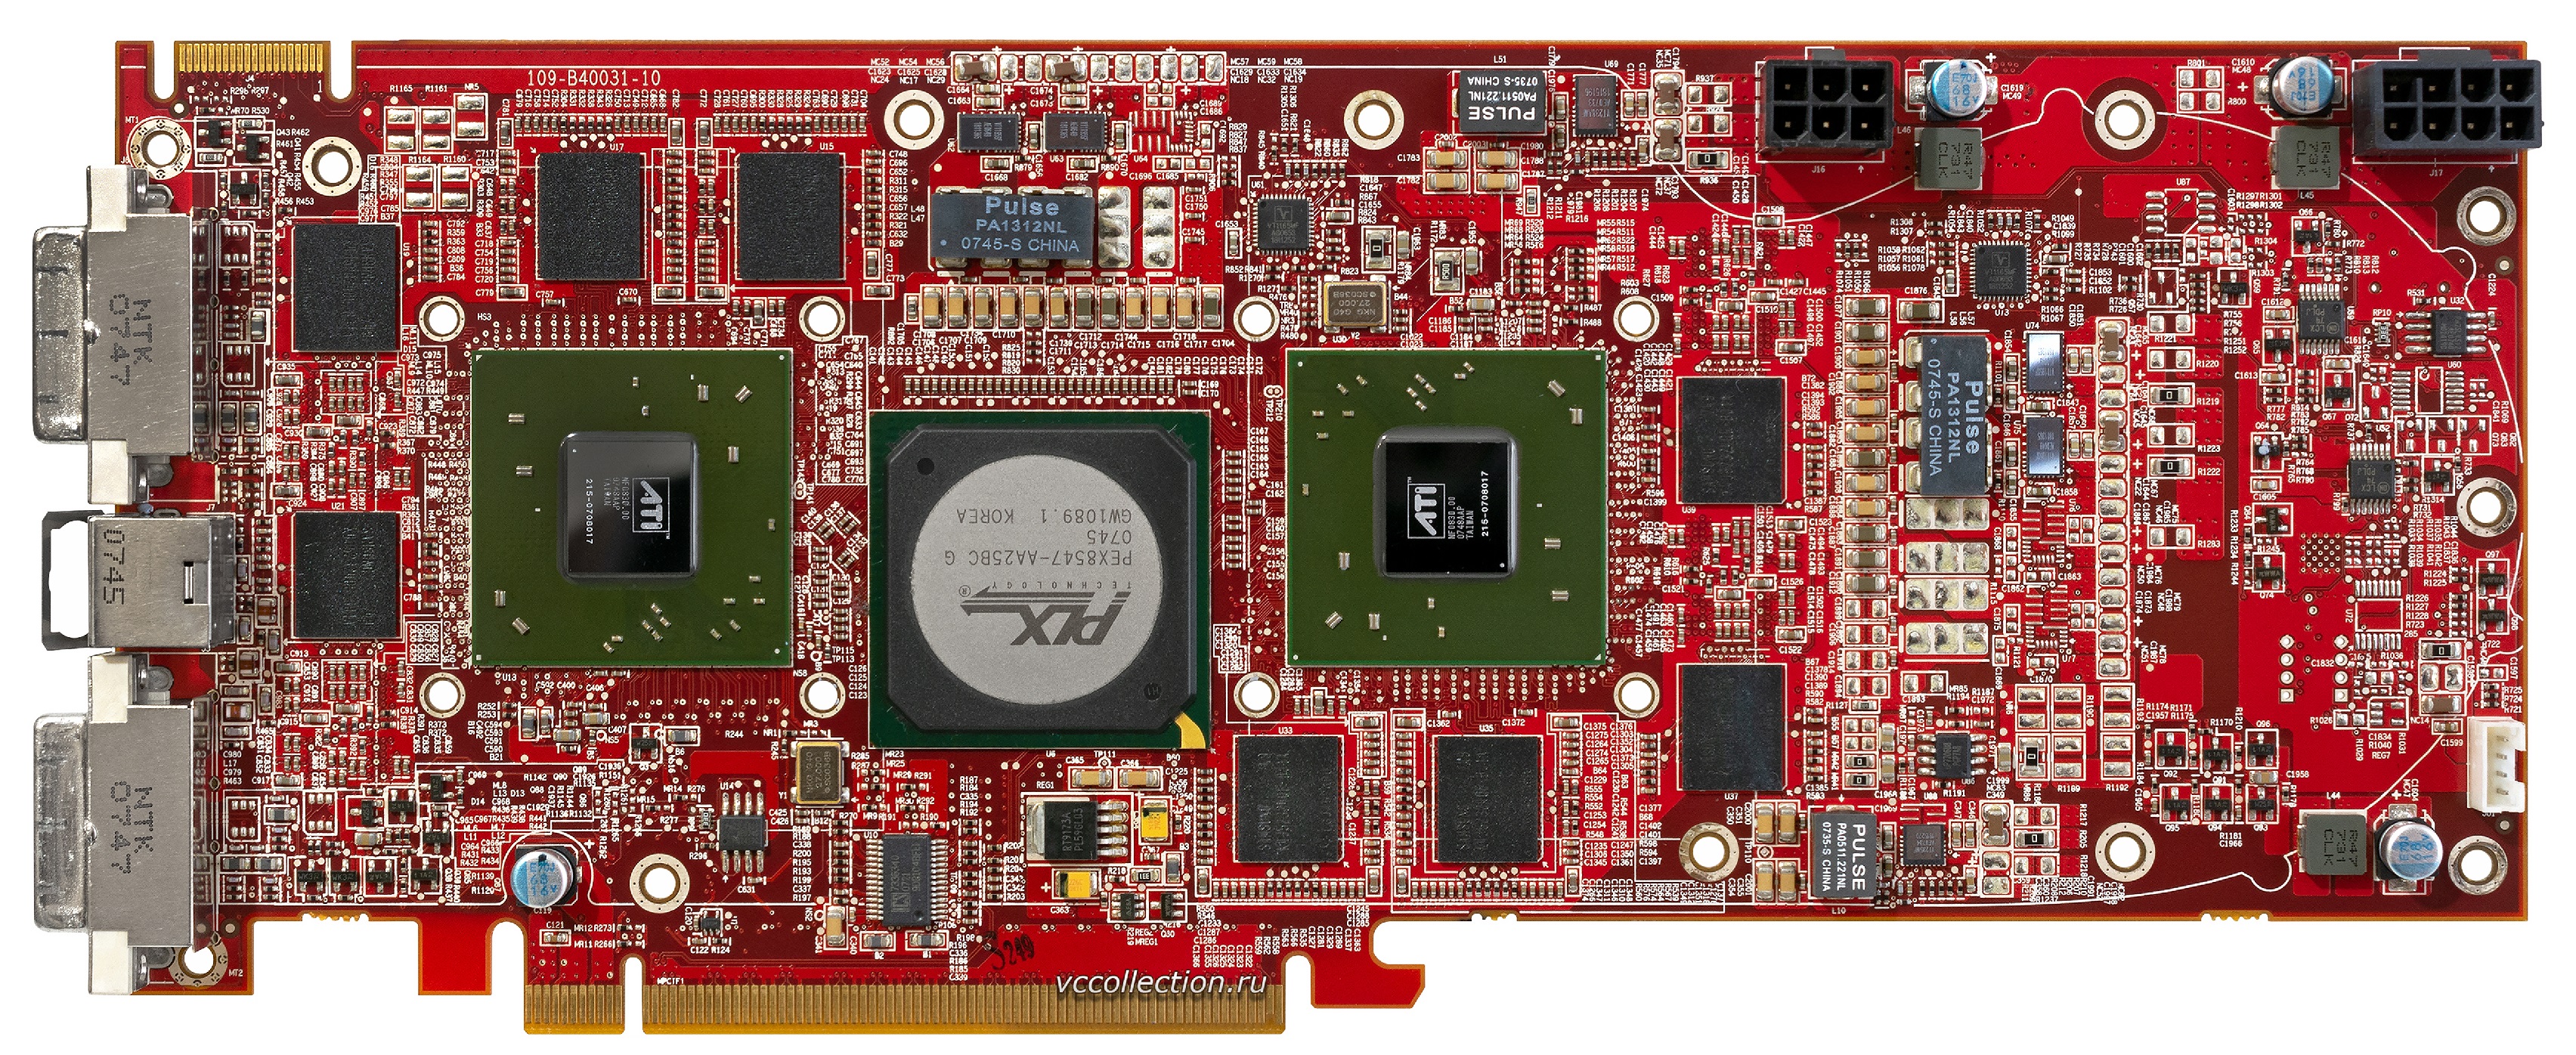 AMD Radeon HD 3870 x2